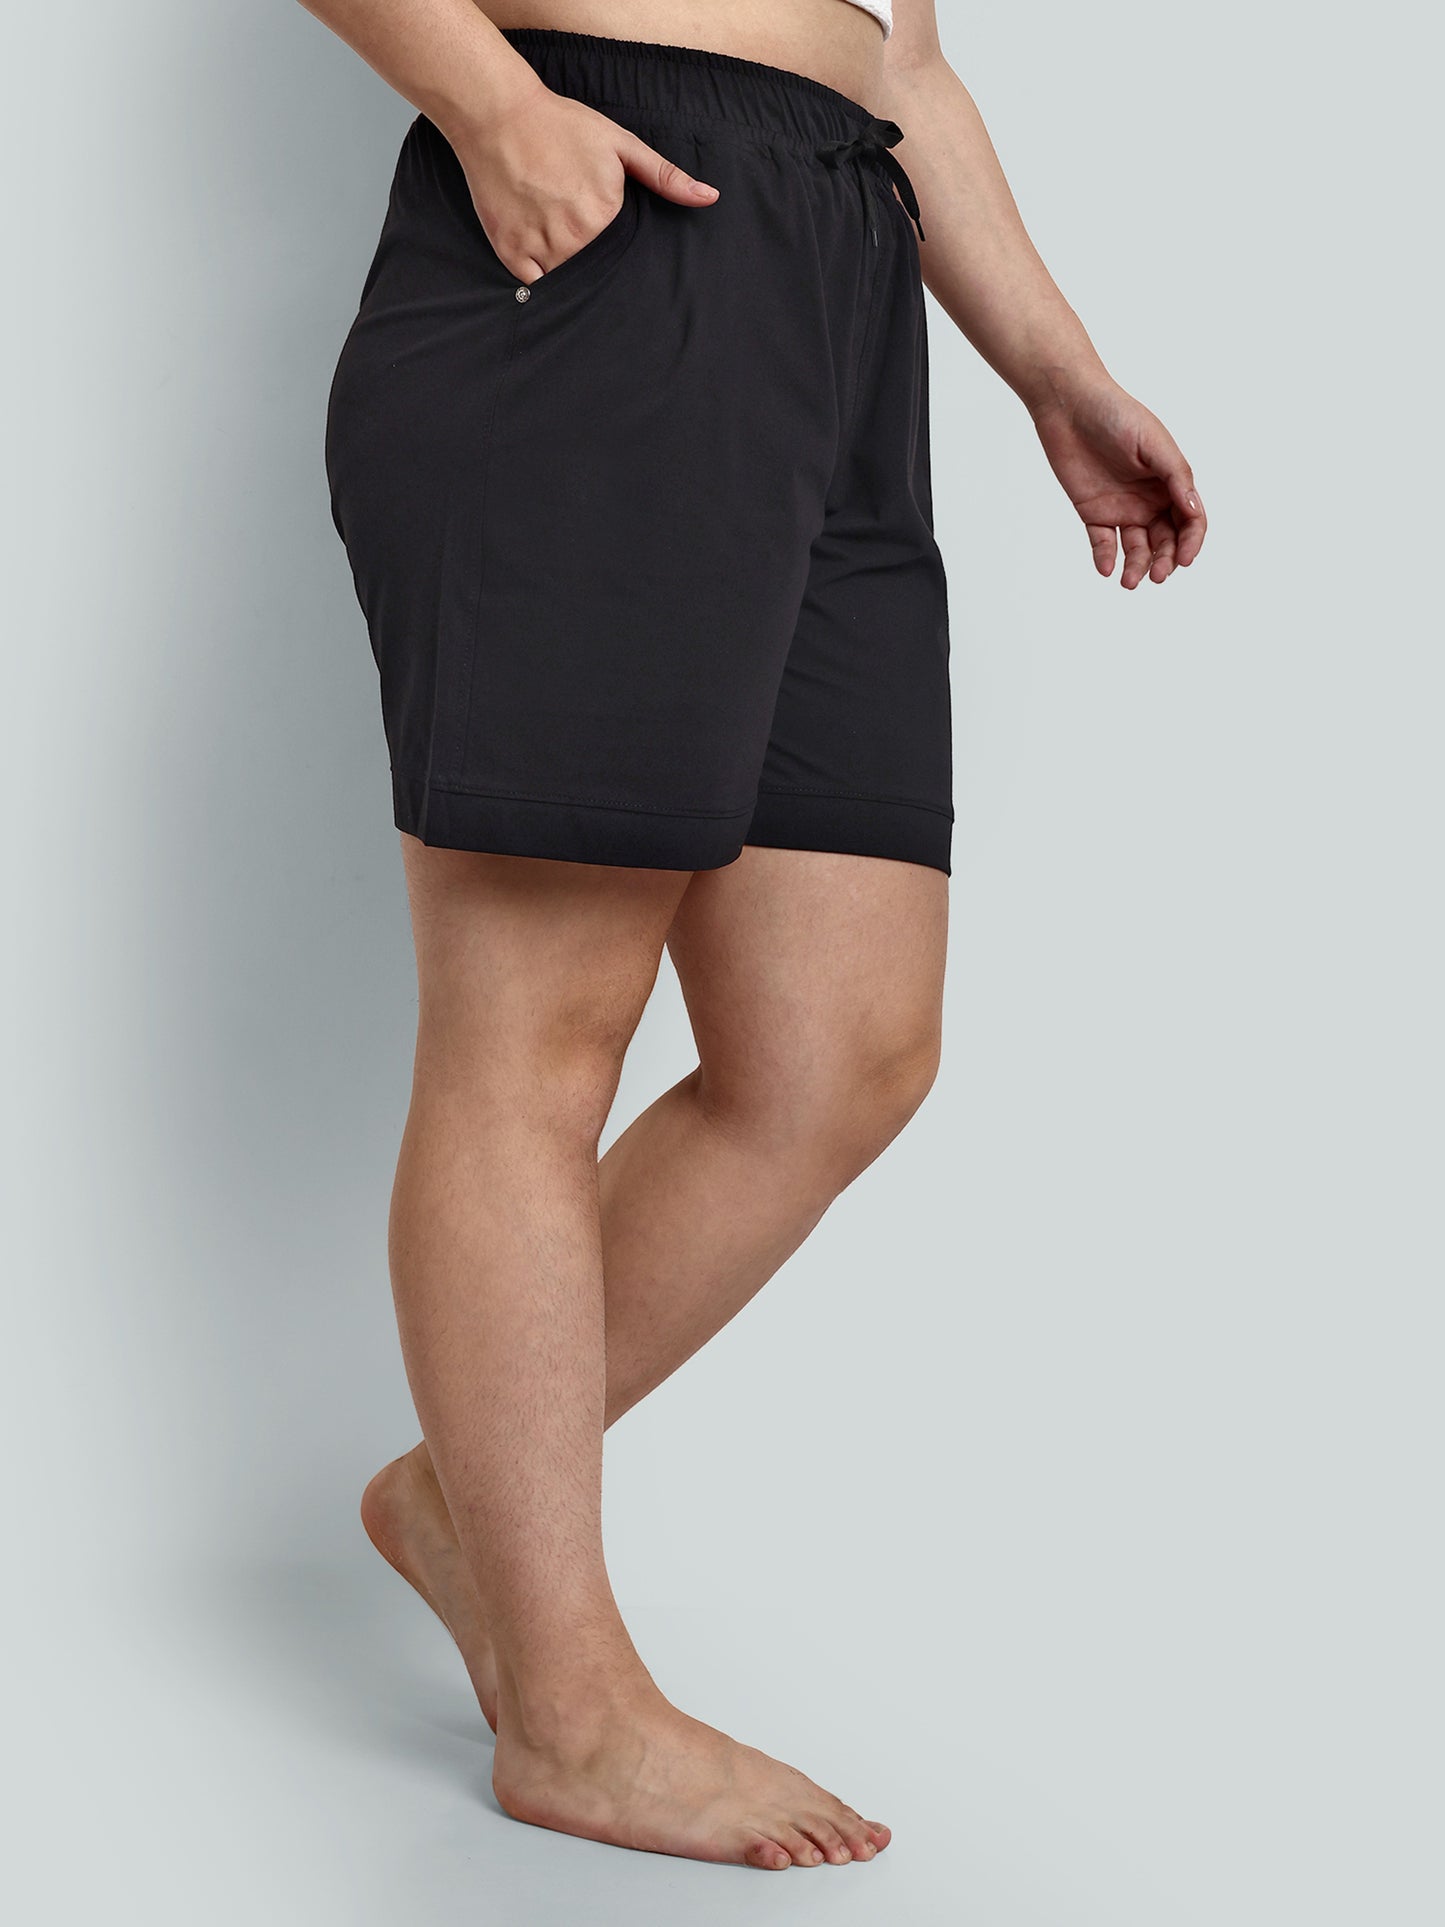 Cotton Shorts For Women - Plain Bermuda - Black